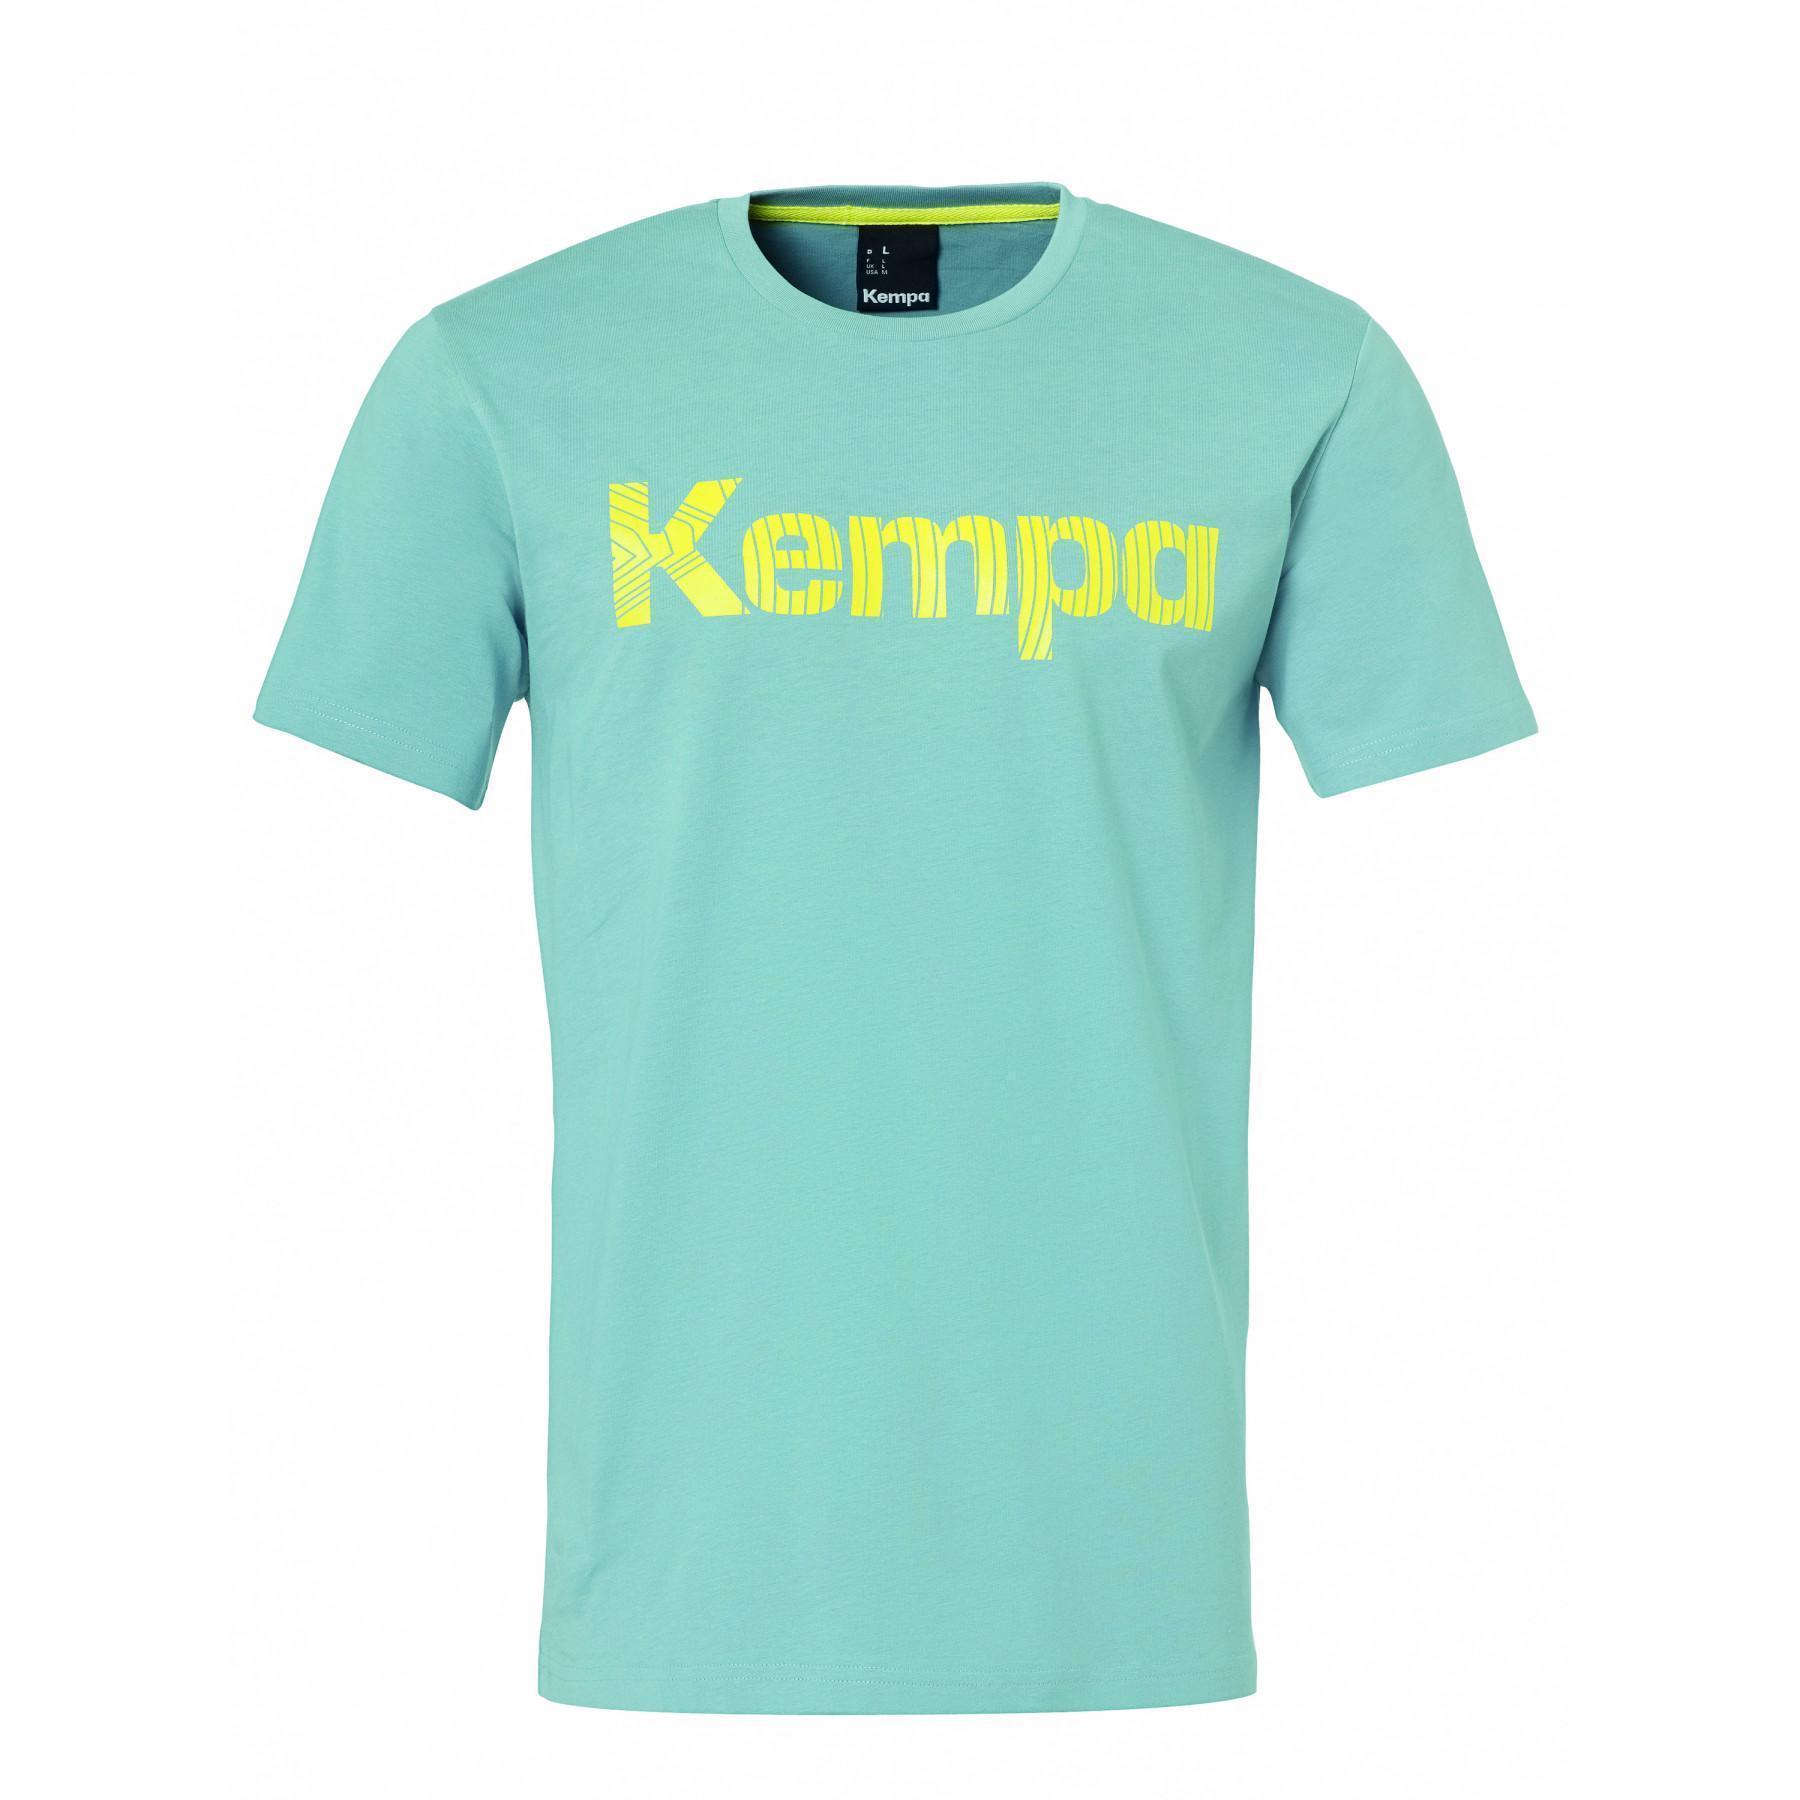 Camiseta niños Graphic Kempa